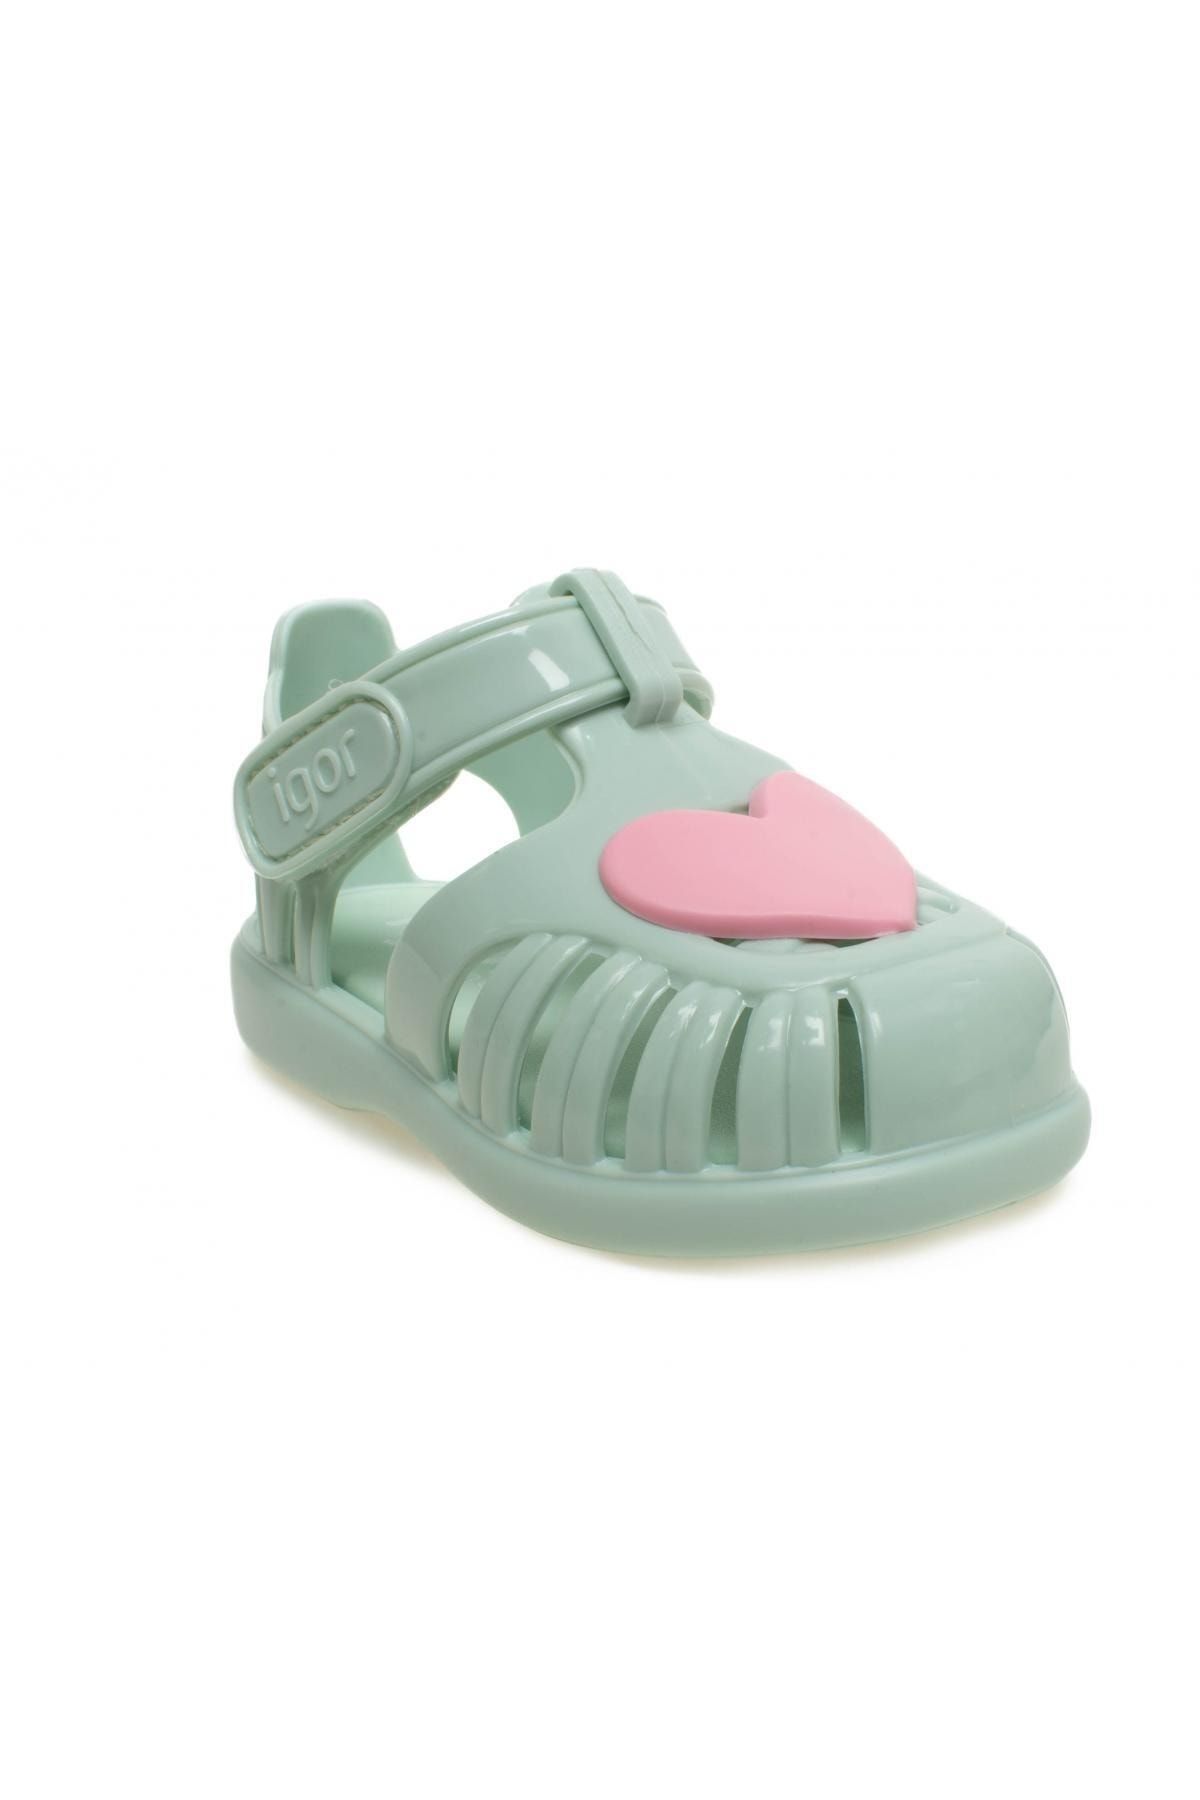 IGOR S10310 Tobby Gloss Love Yeşil Çocuk Sandalet